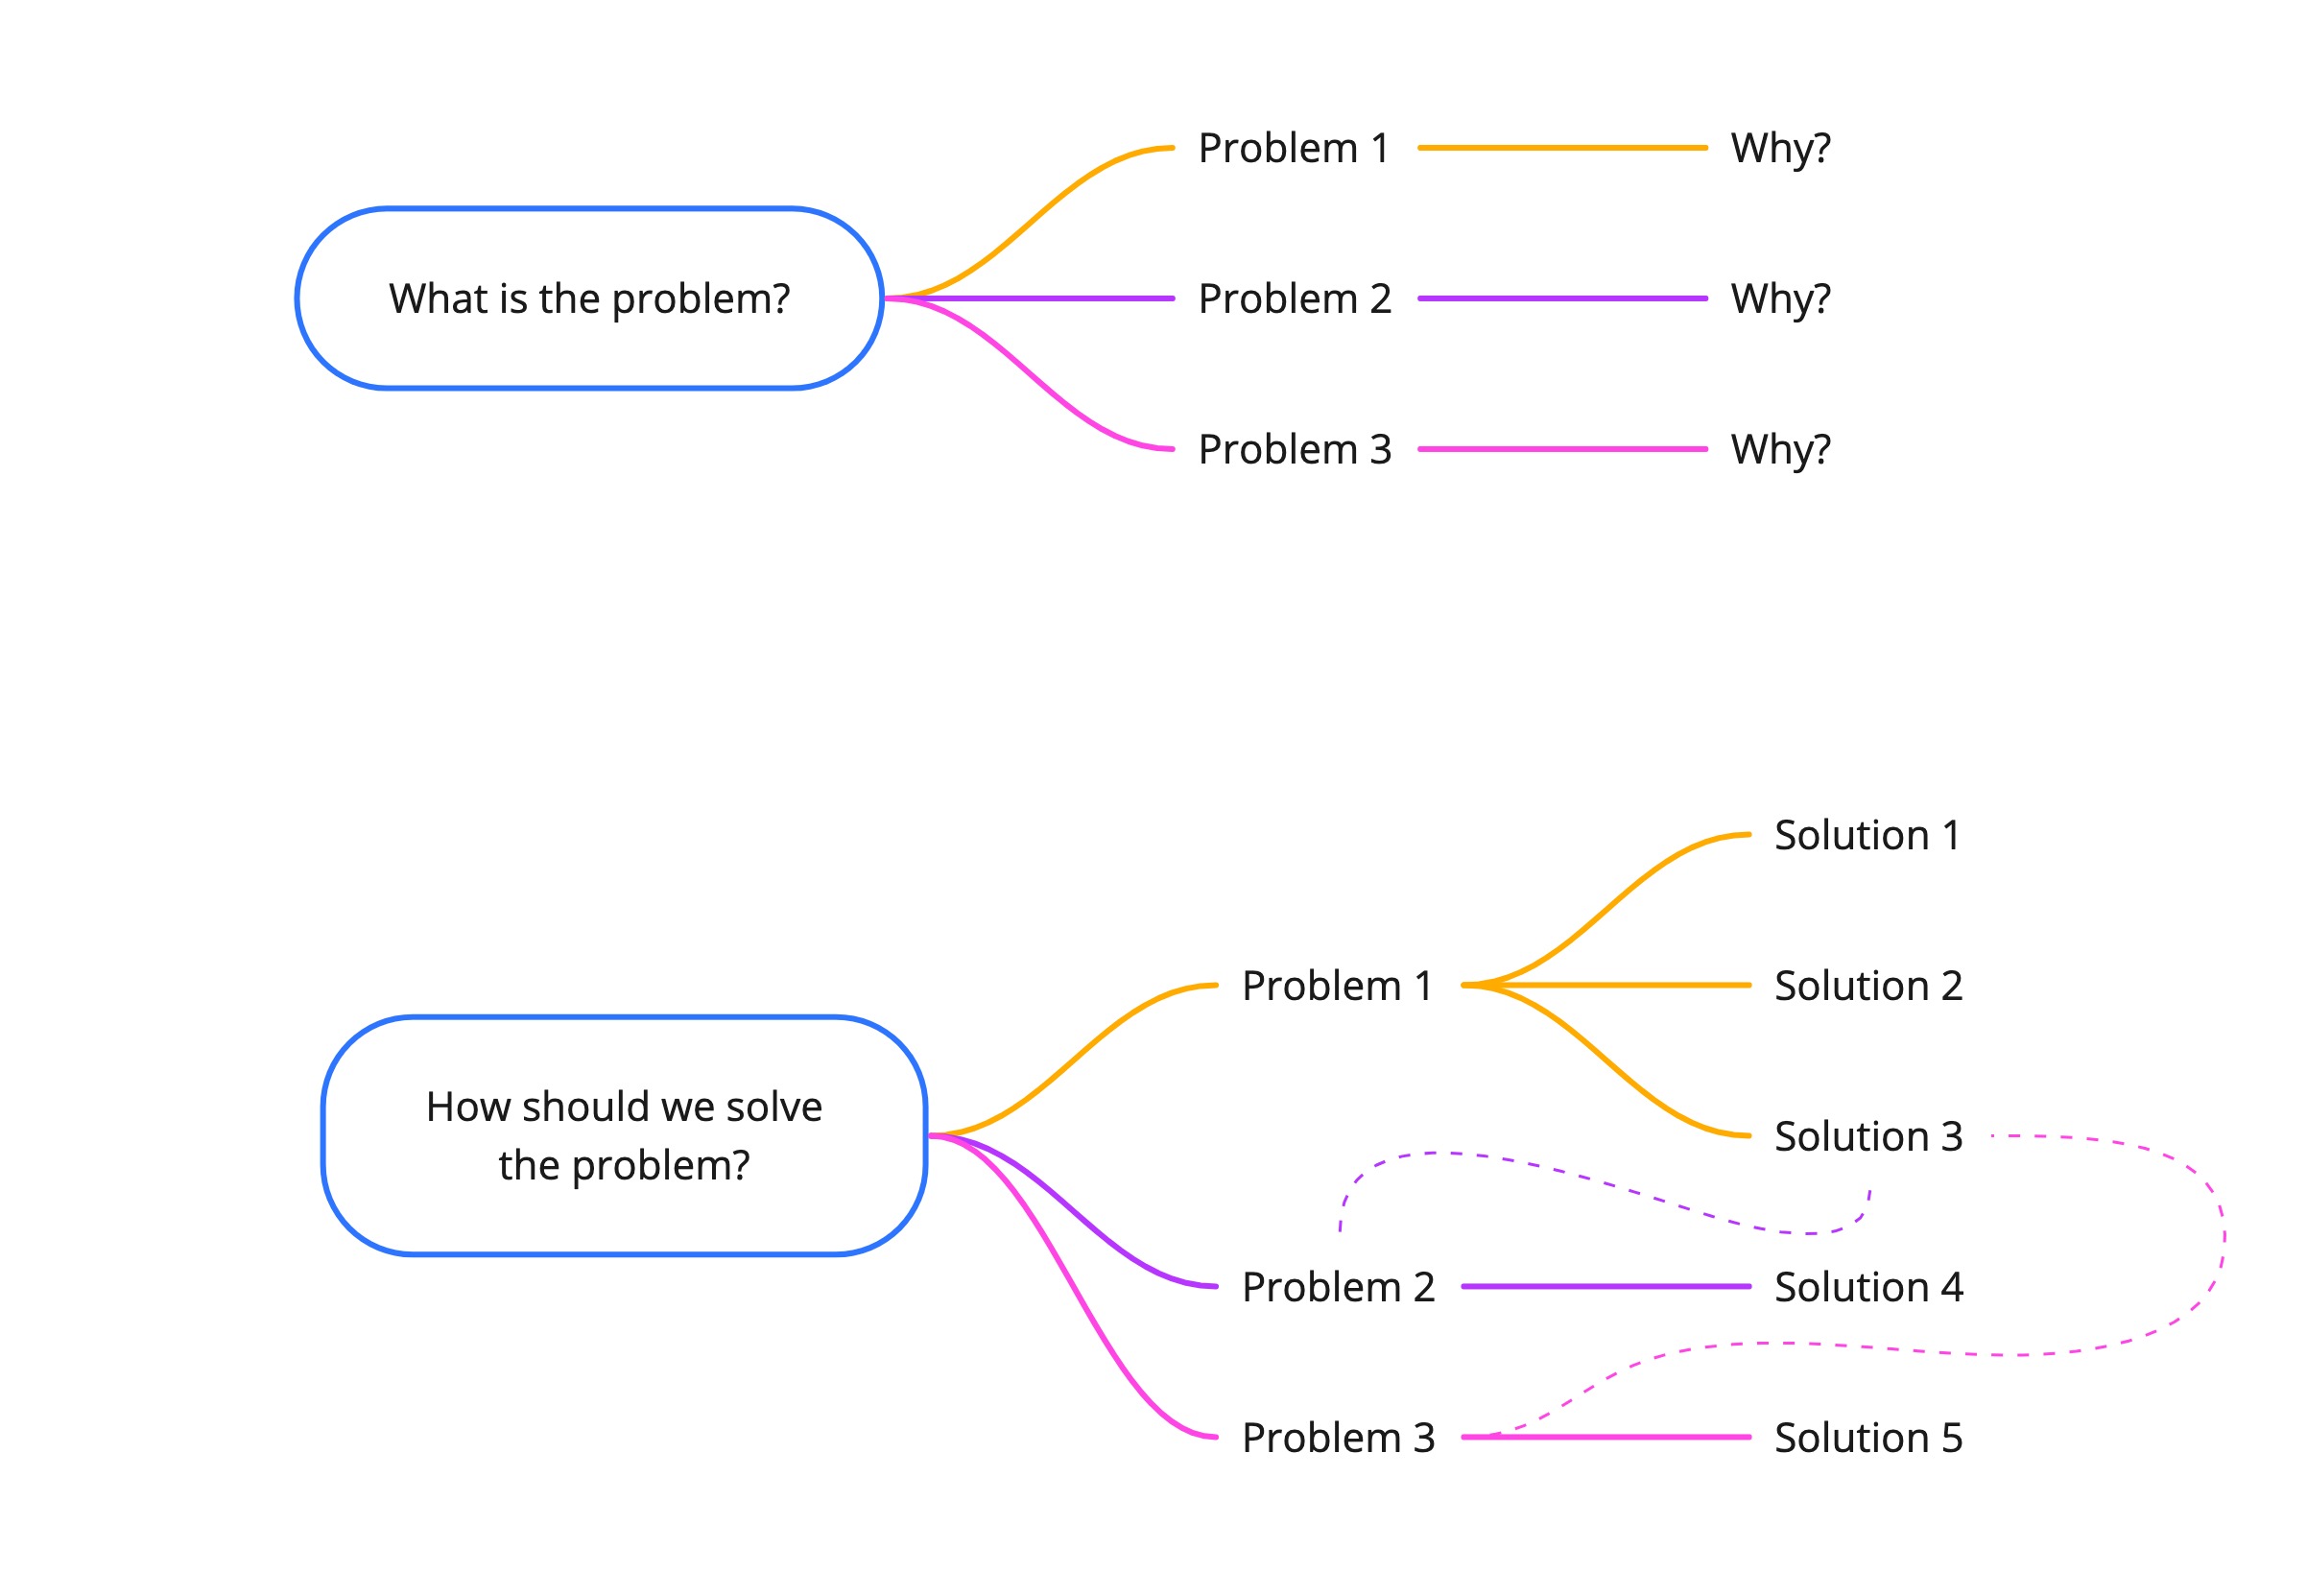 strategic thinking in complex problem solving arnaud chevallier pdf